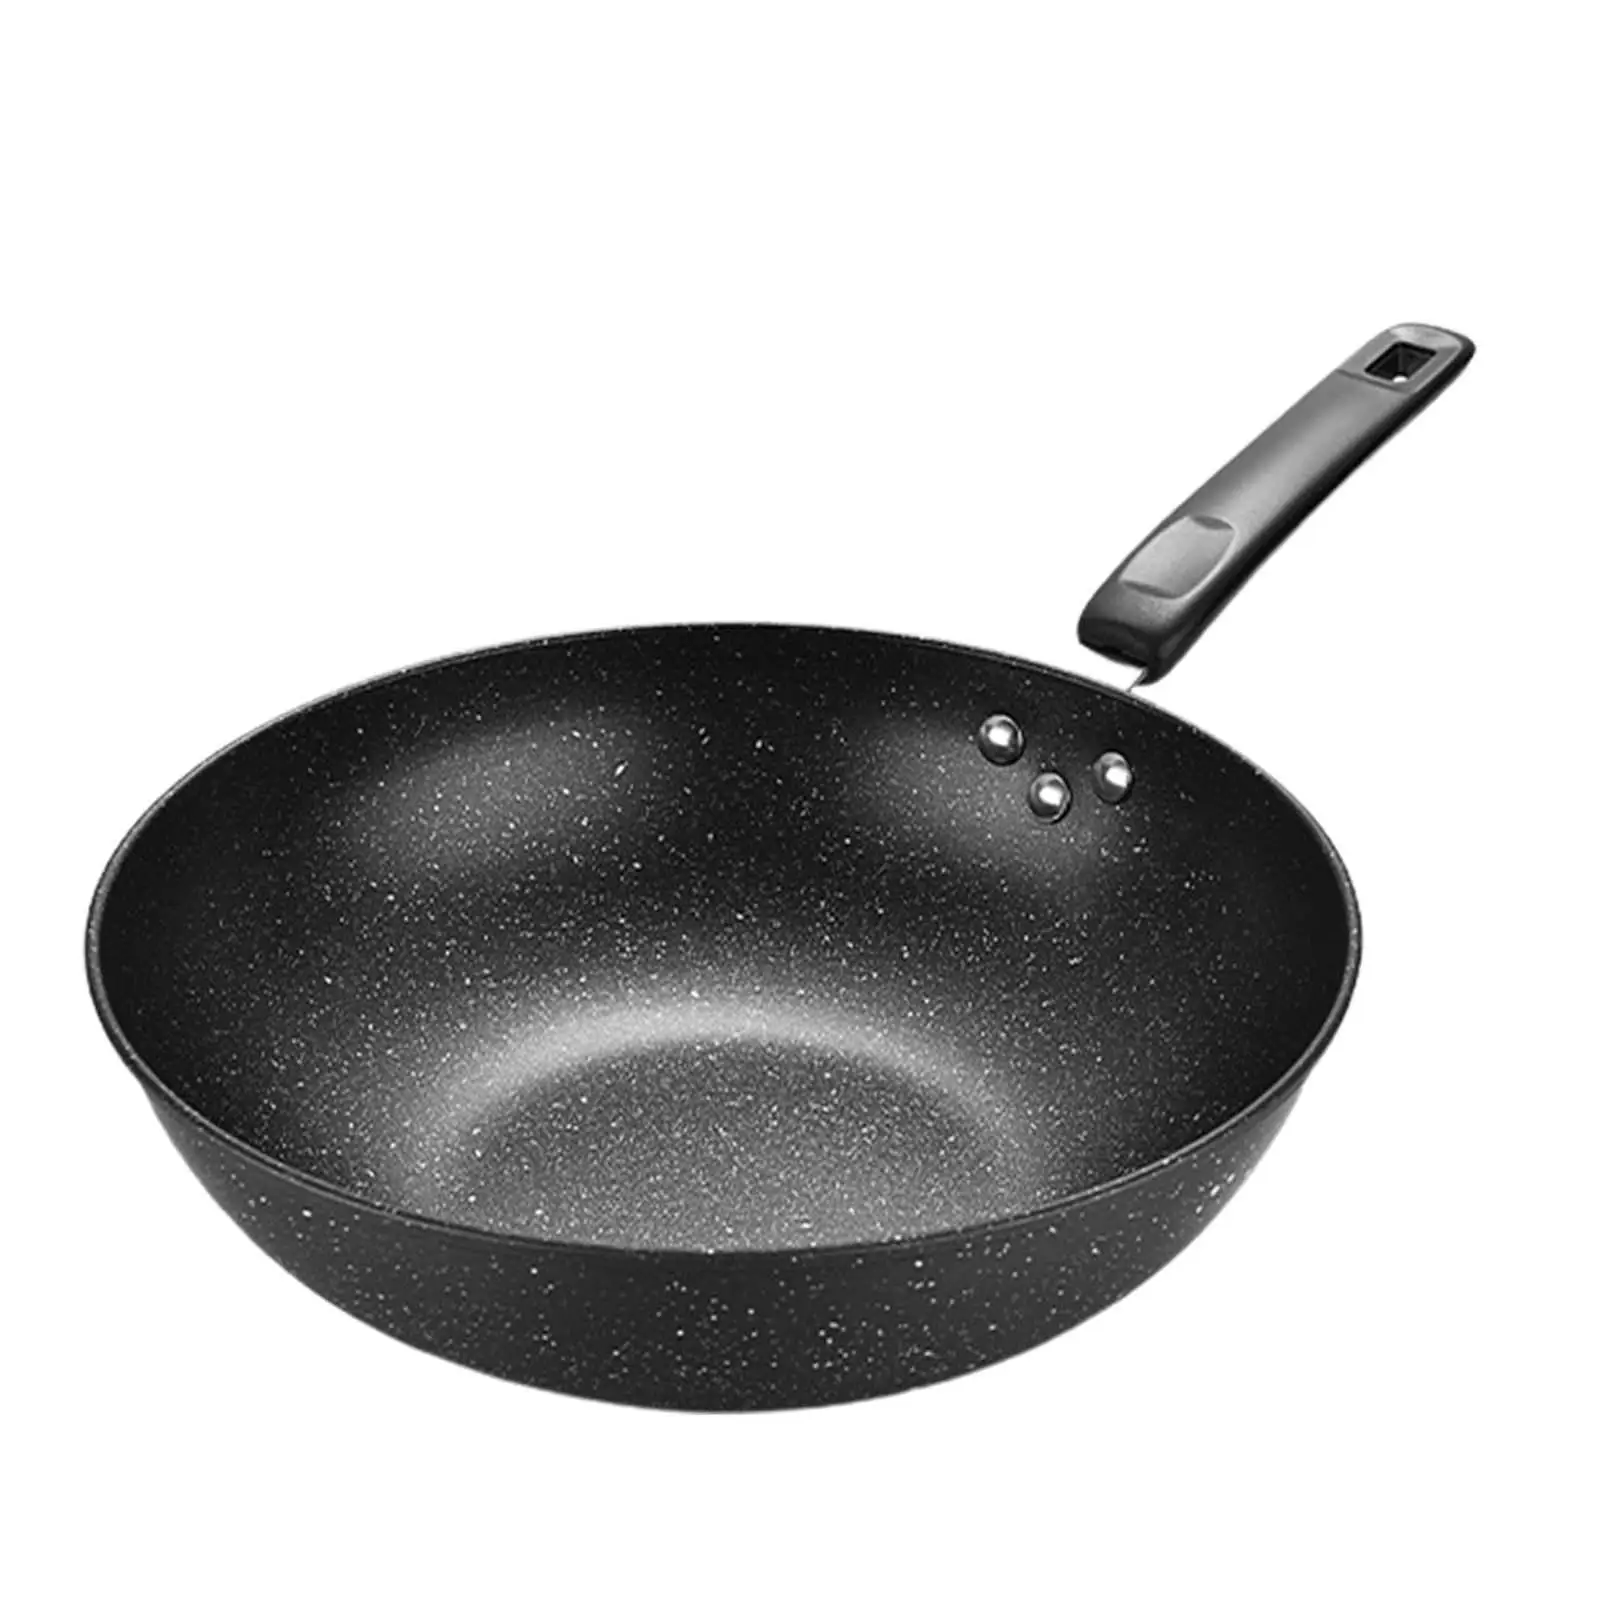 Maifan Stone Pan Multifunction 12 inch Metal Frypan Wok Pan Non Stick Skillet Saute Pan for Home Restaurant Kitchen All Stovetop